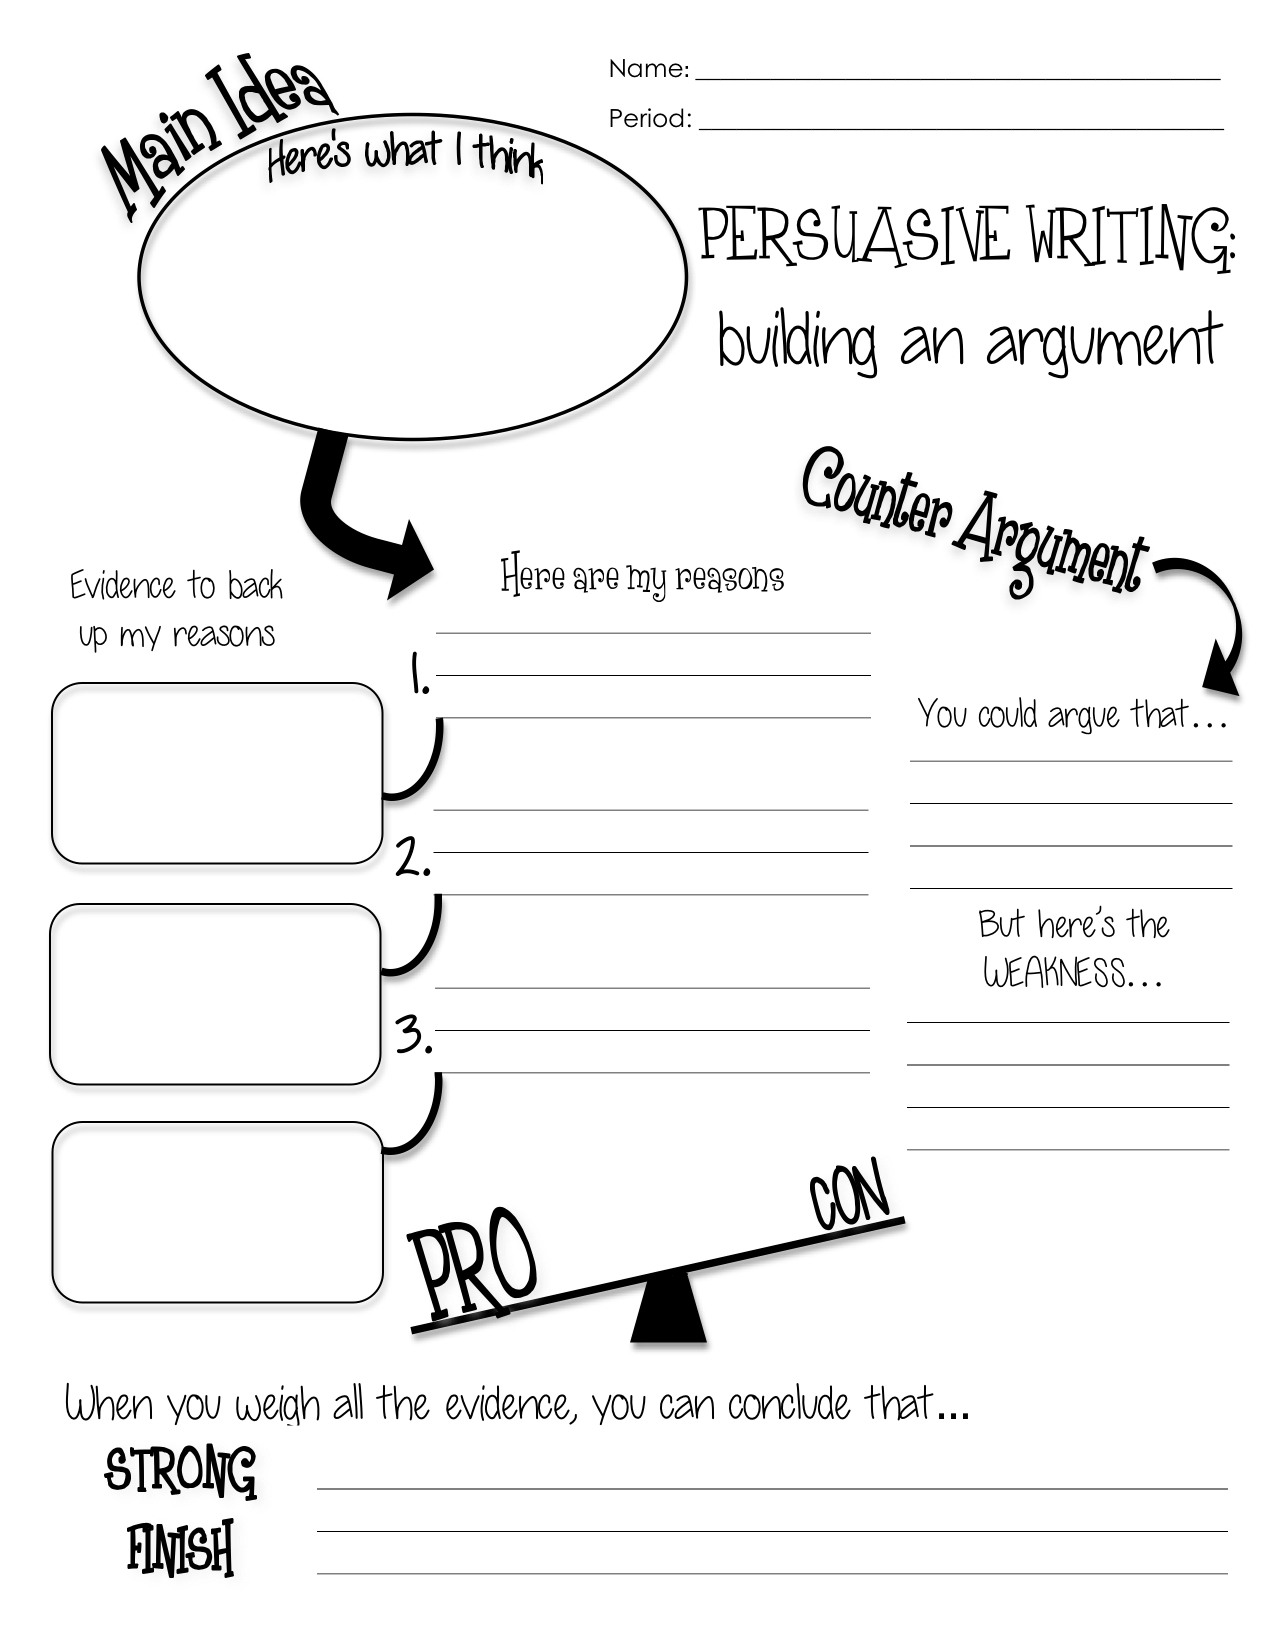 16 Best Images of Persuasive Writing Worksheets Grade 5 Argument